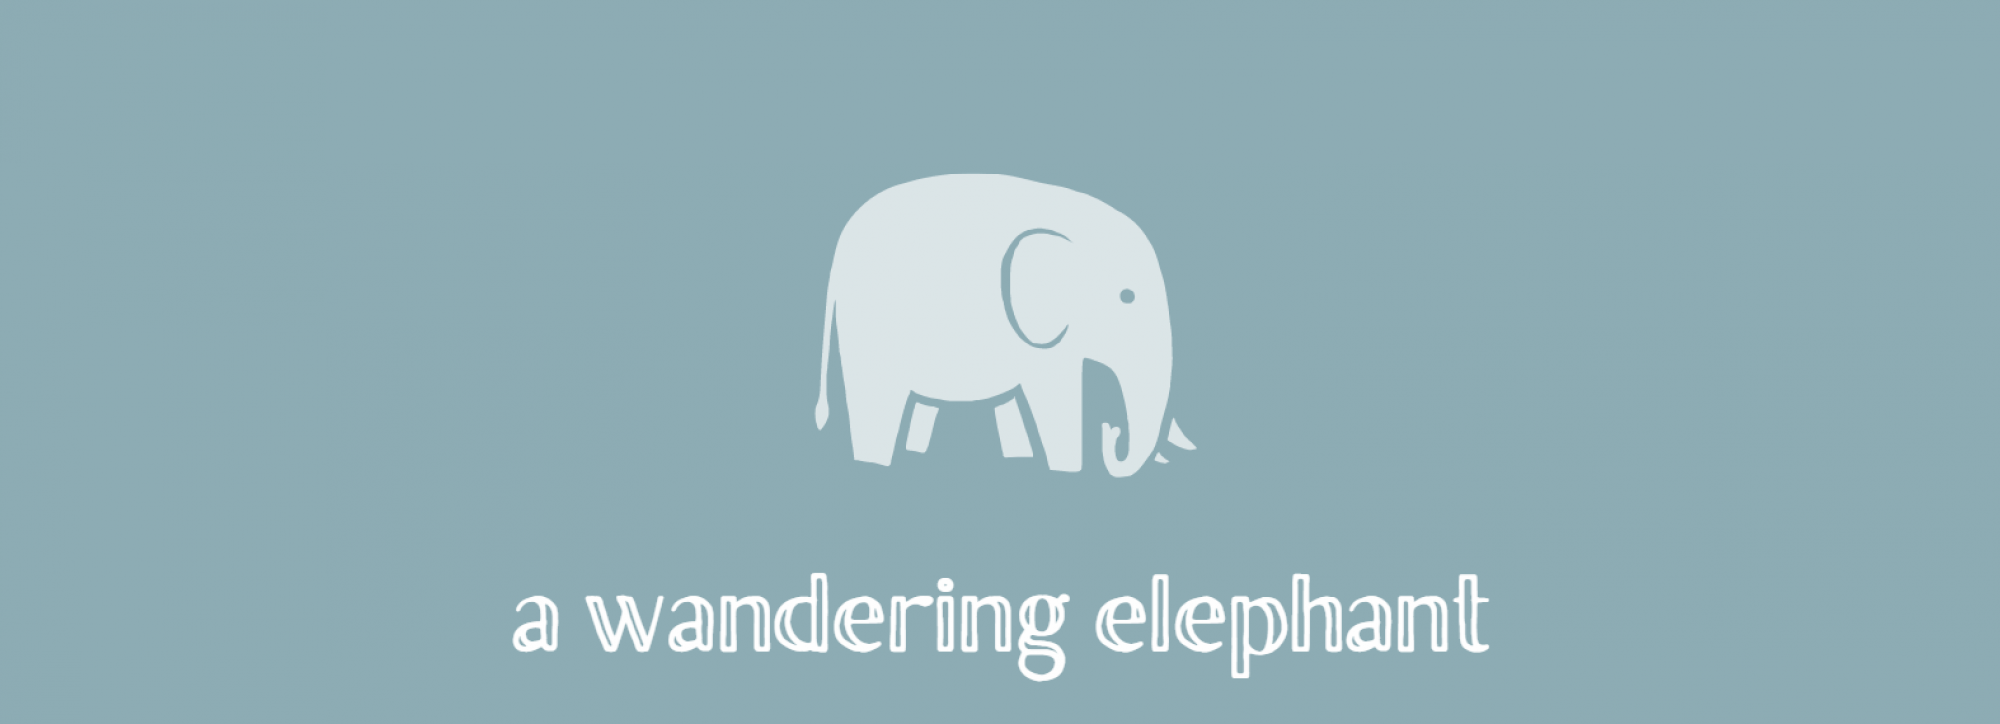 A Wandering Elephant